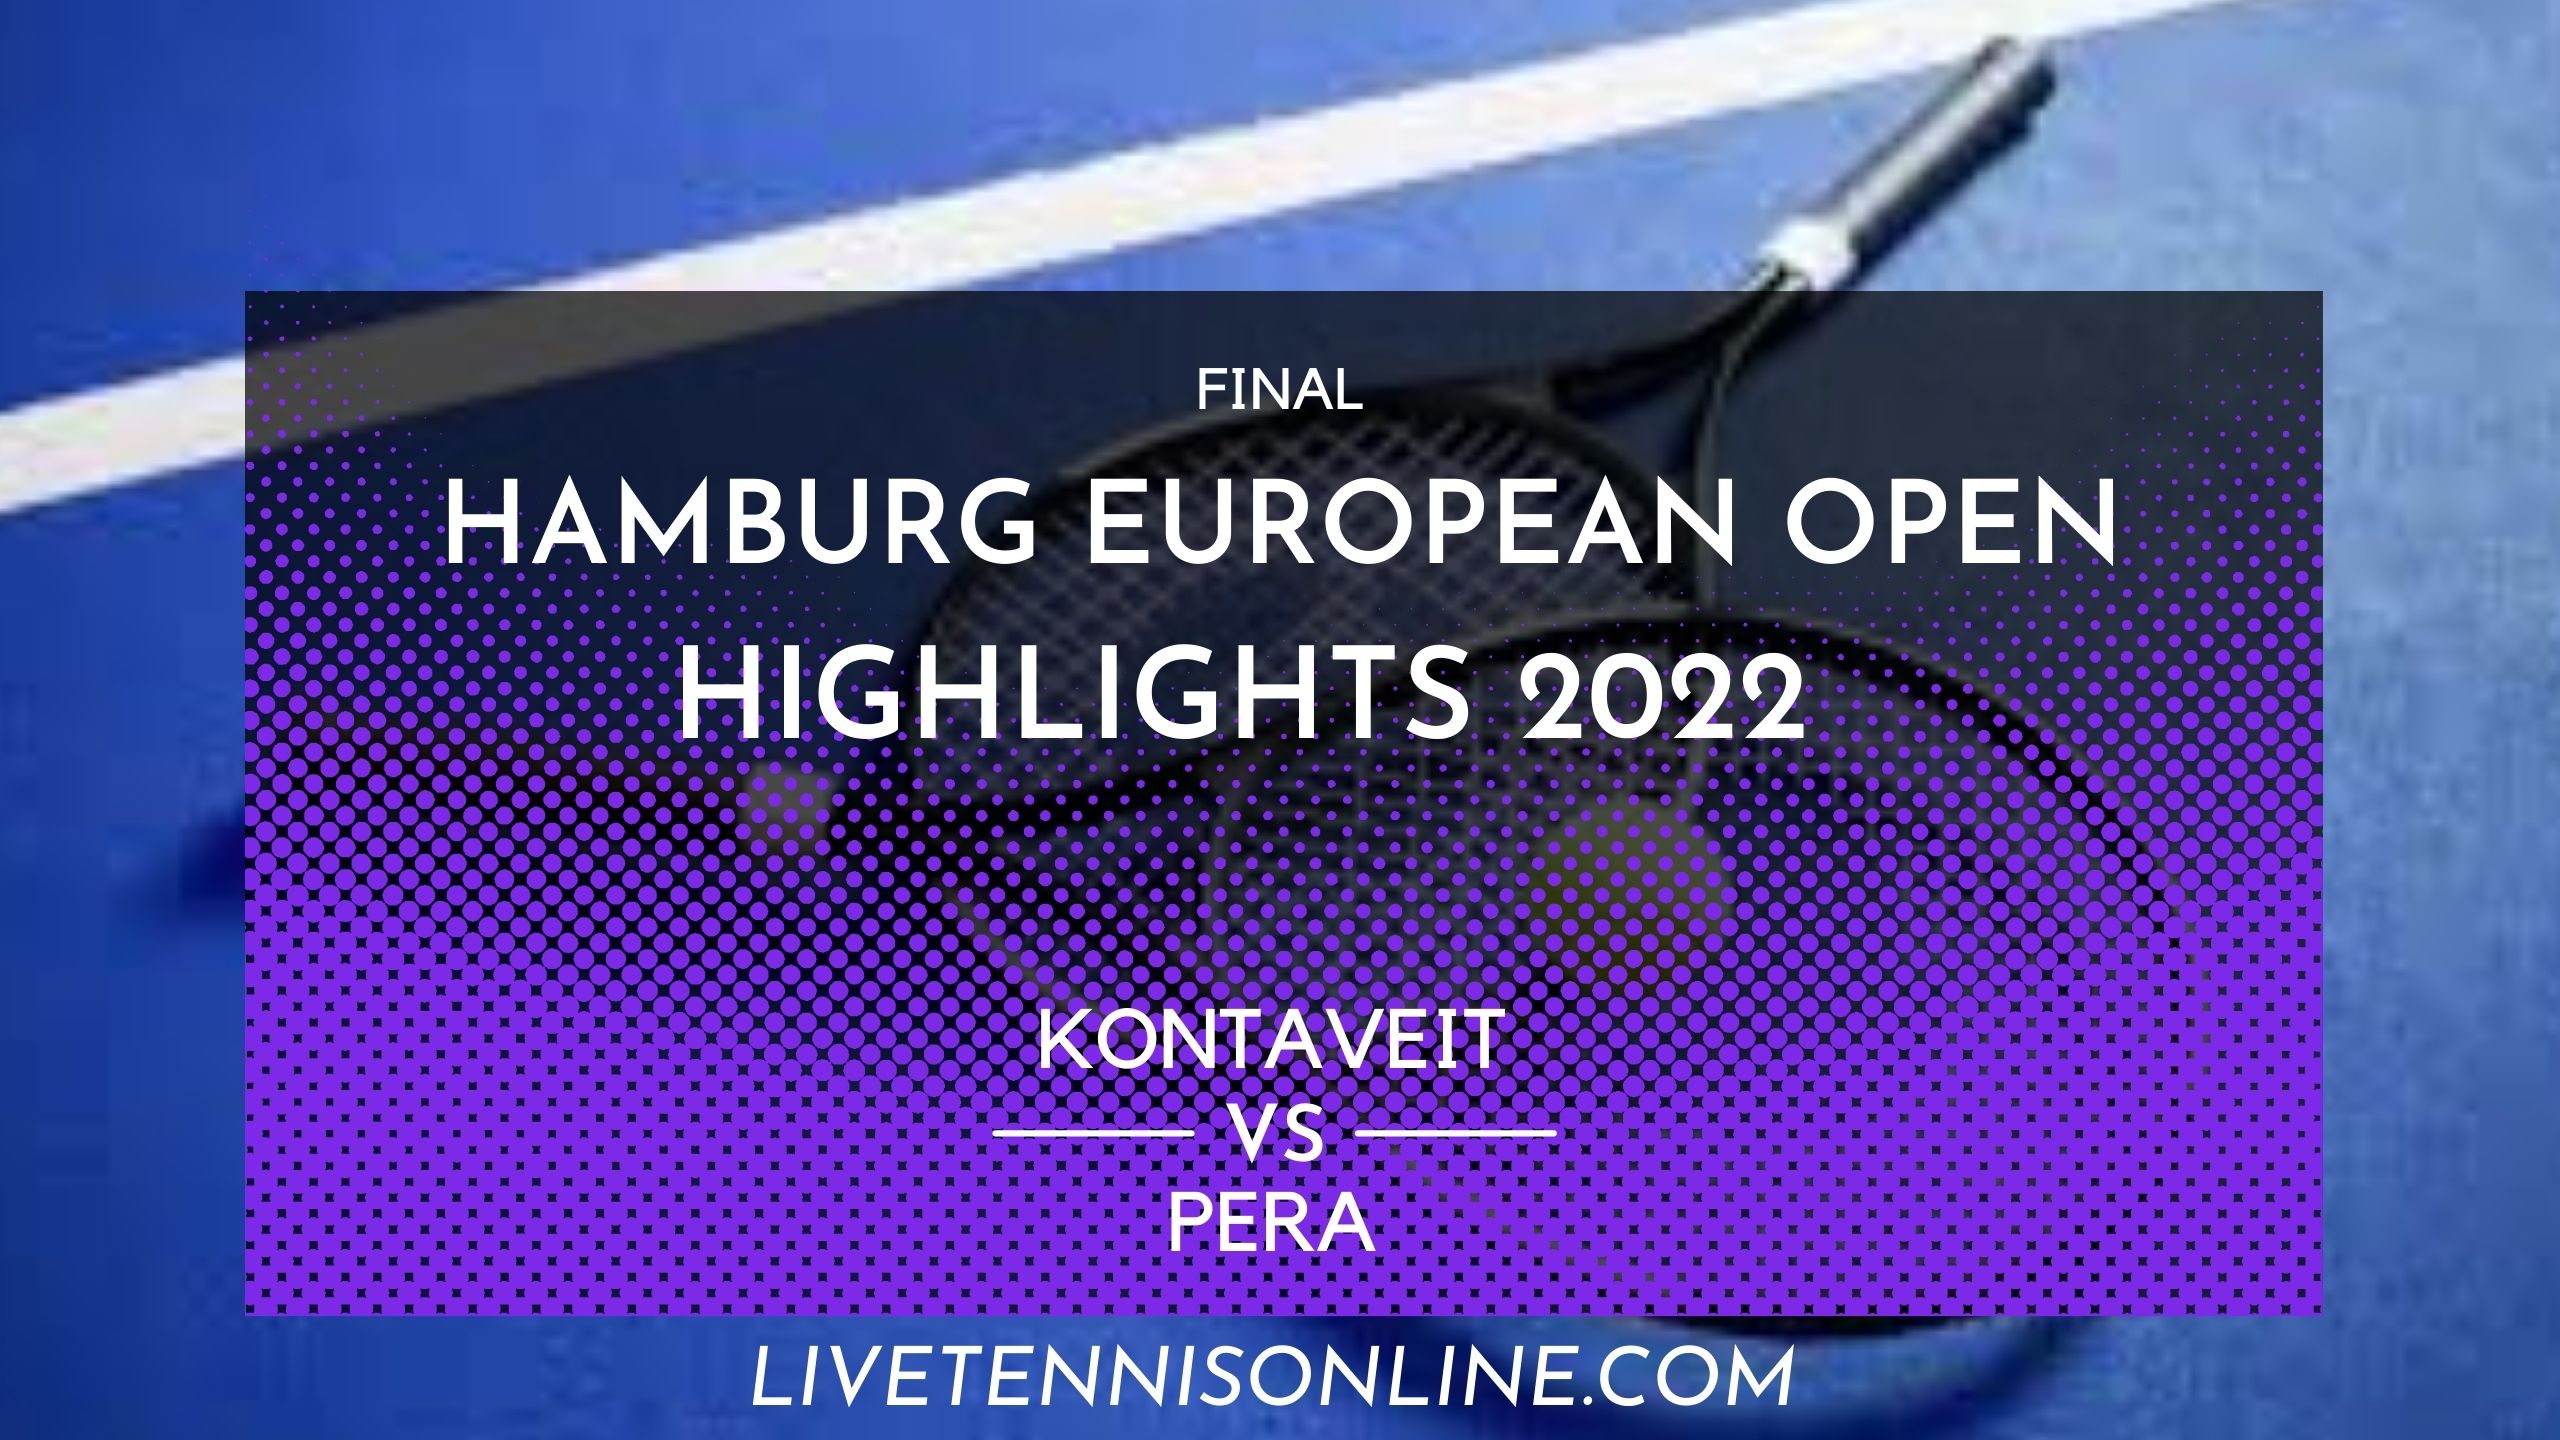 Kontaveit Vs Pera Final Highlights 2022 Hamburg European Open